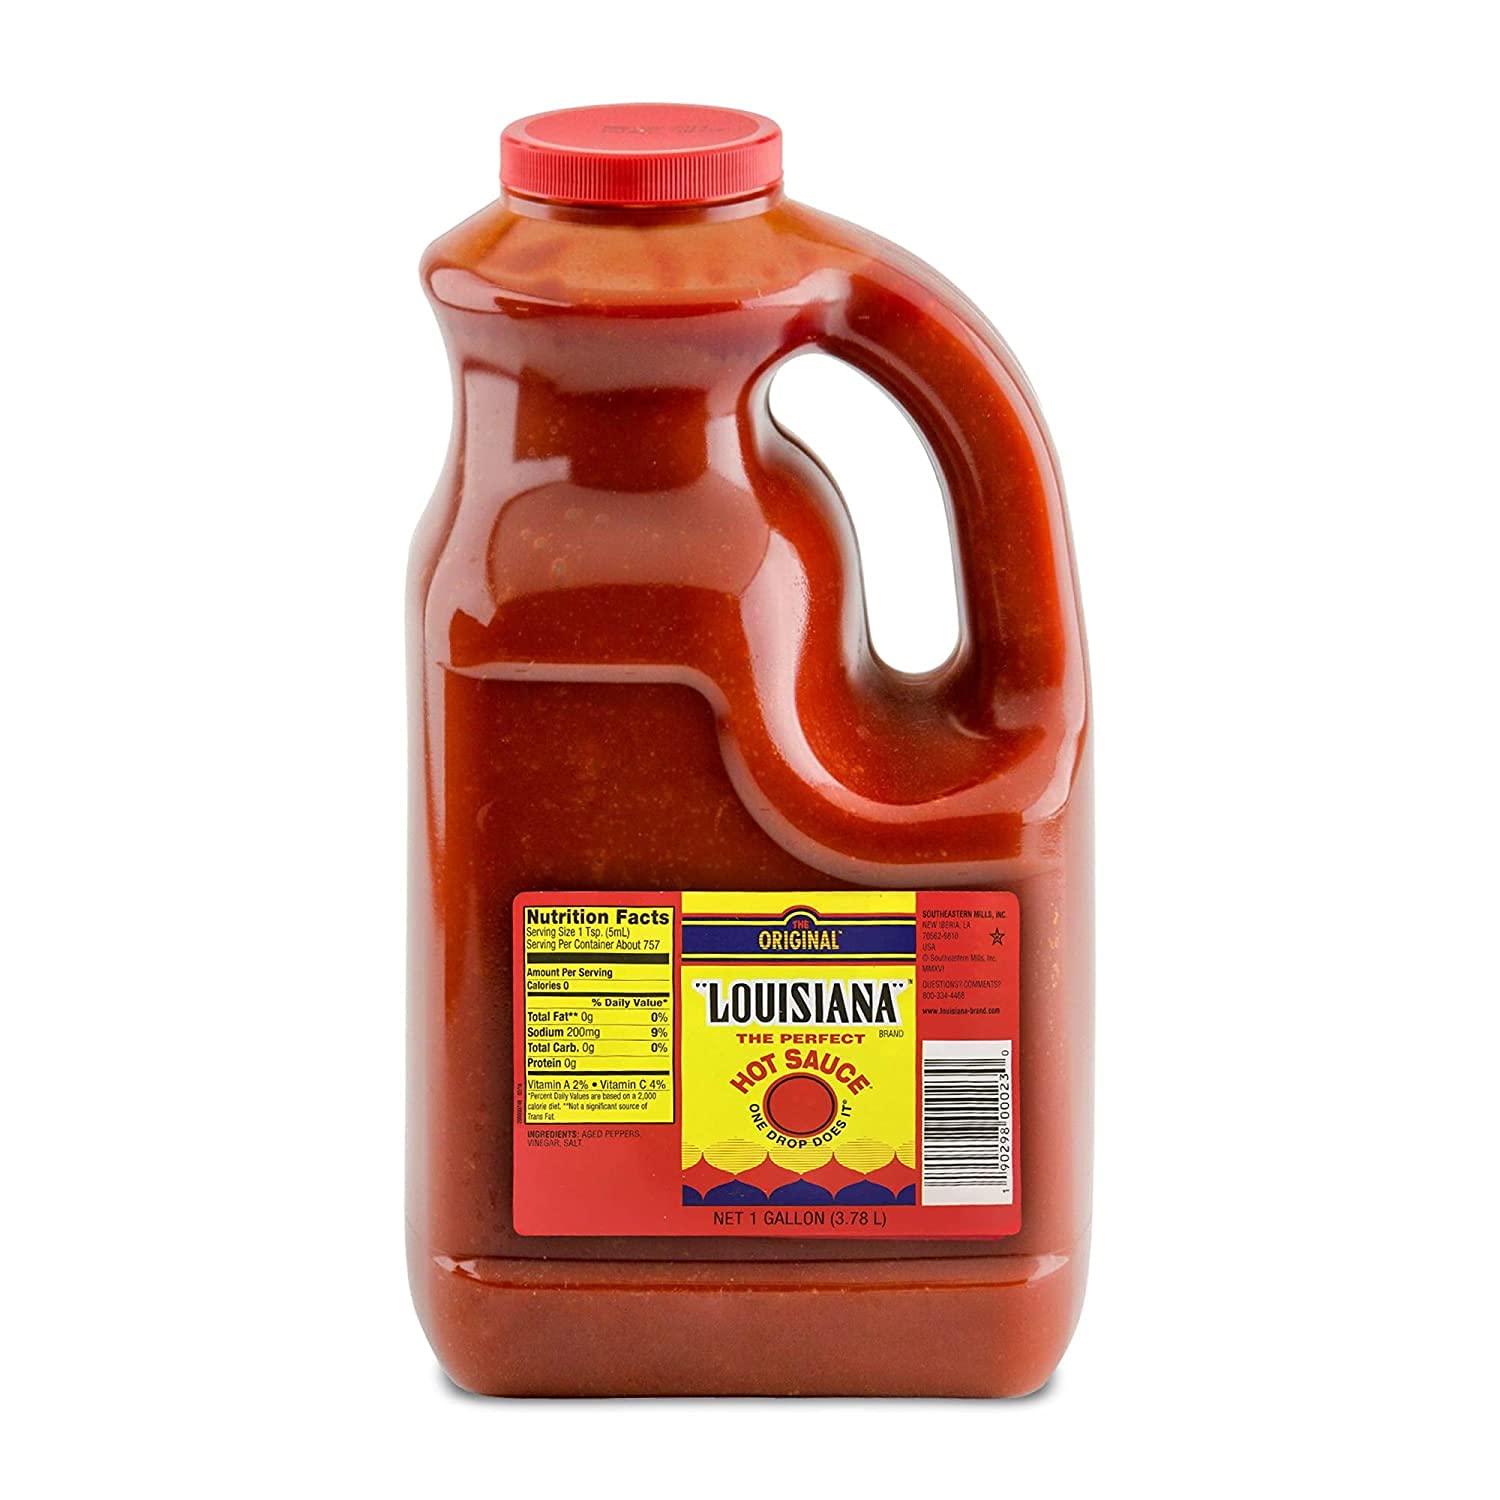 Louisiana Hot Sauce